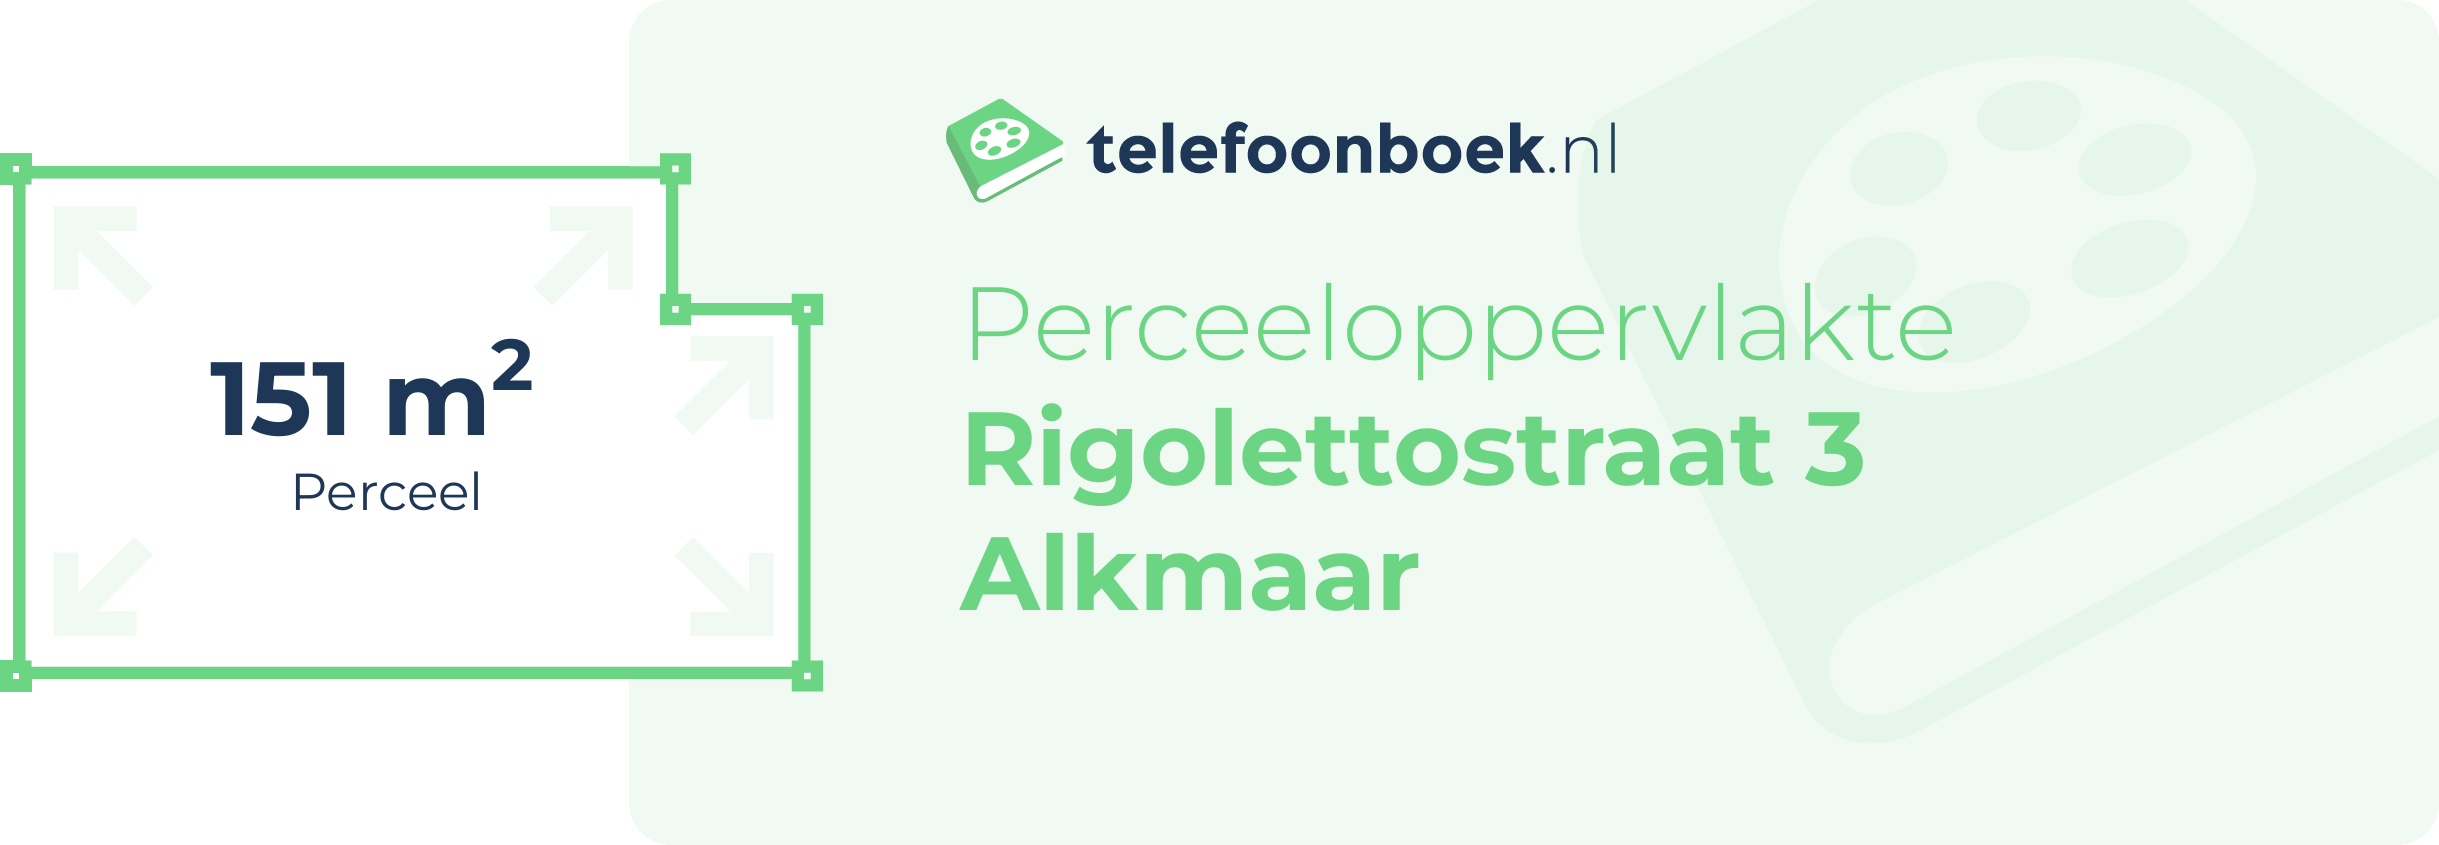 Perceeloppervlakte Rigolettostraat 3 Alkmaar